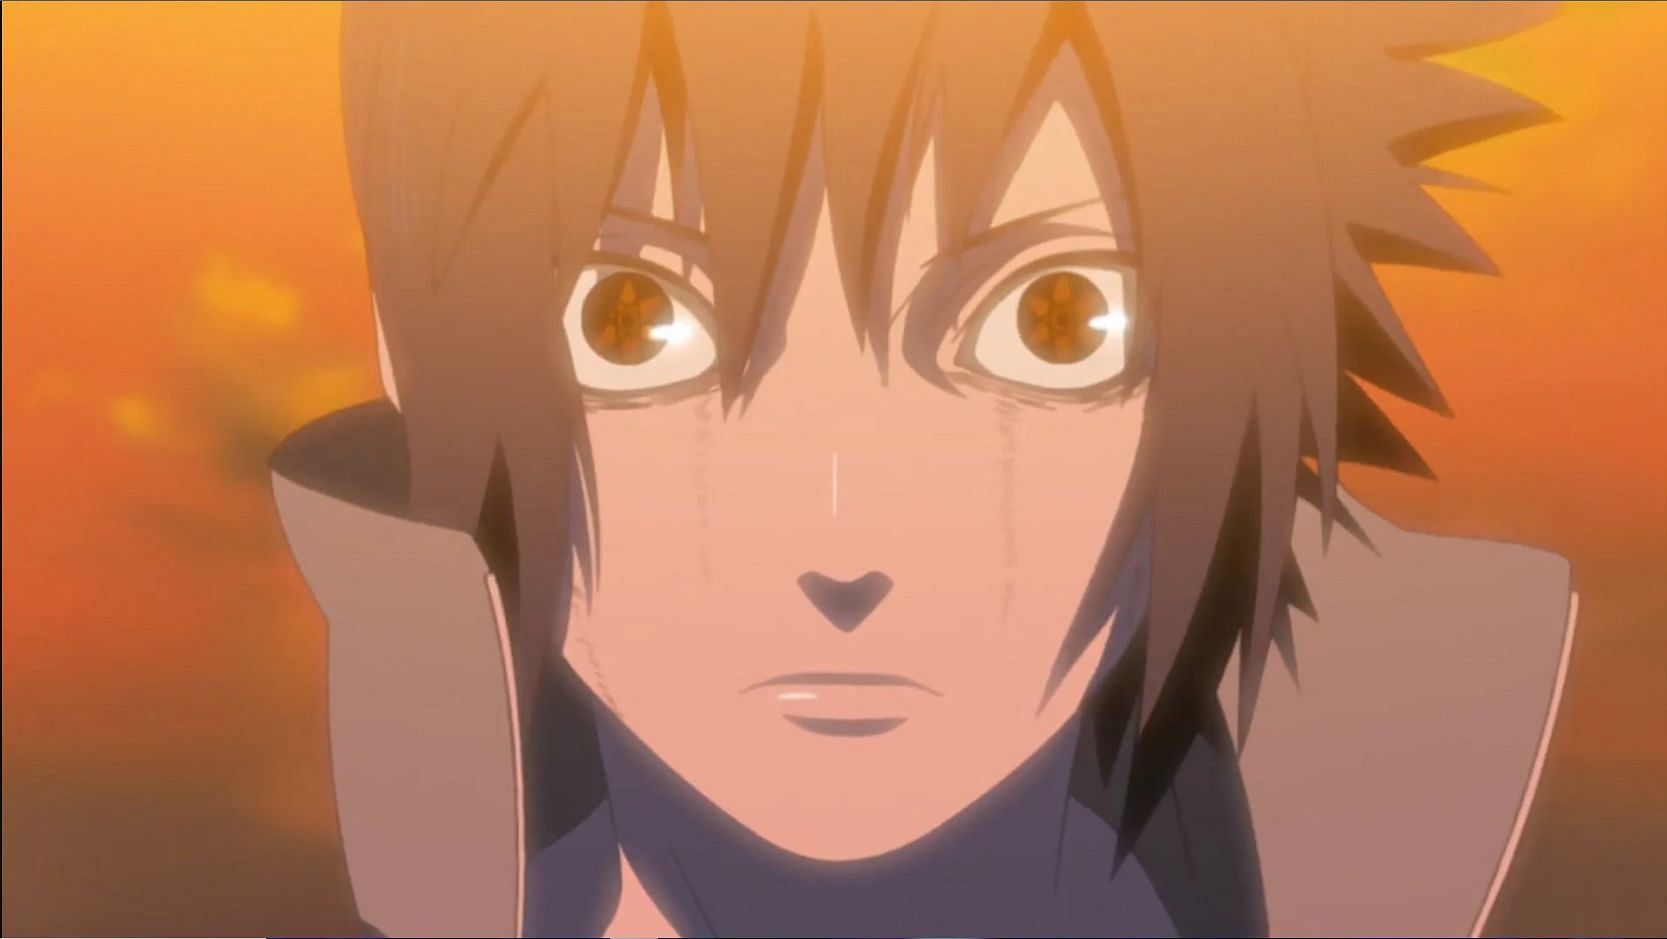 Sasuke awakening Mangekyo Sharingan after learning the truth behind Itachi (Image via Naruto) 